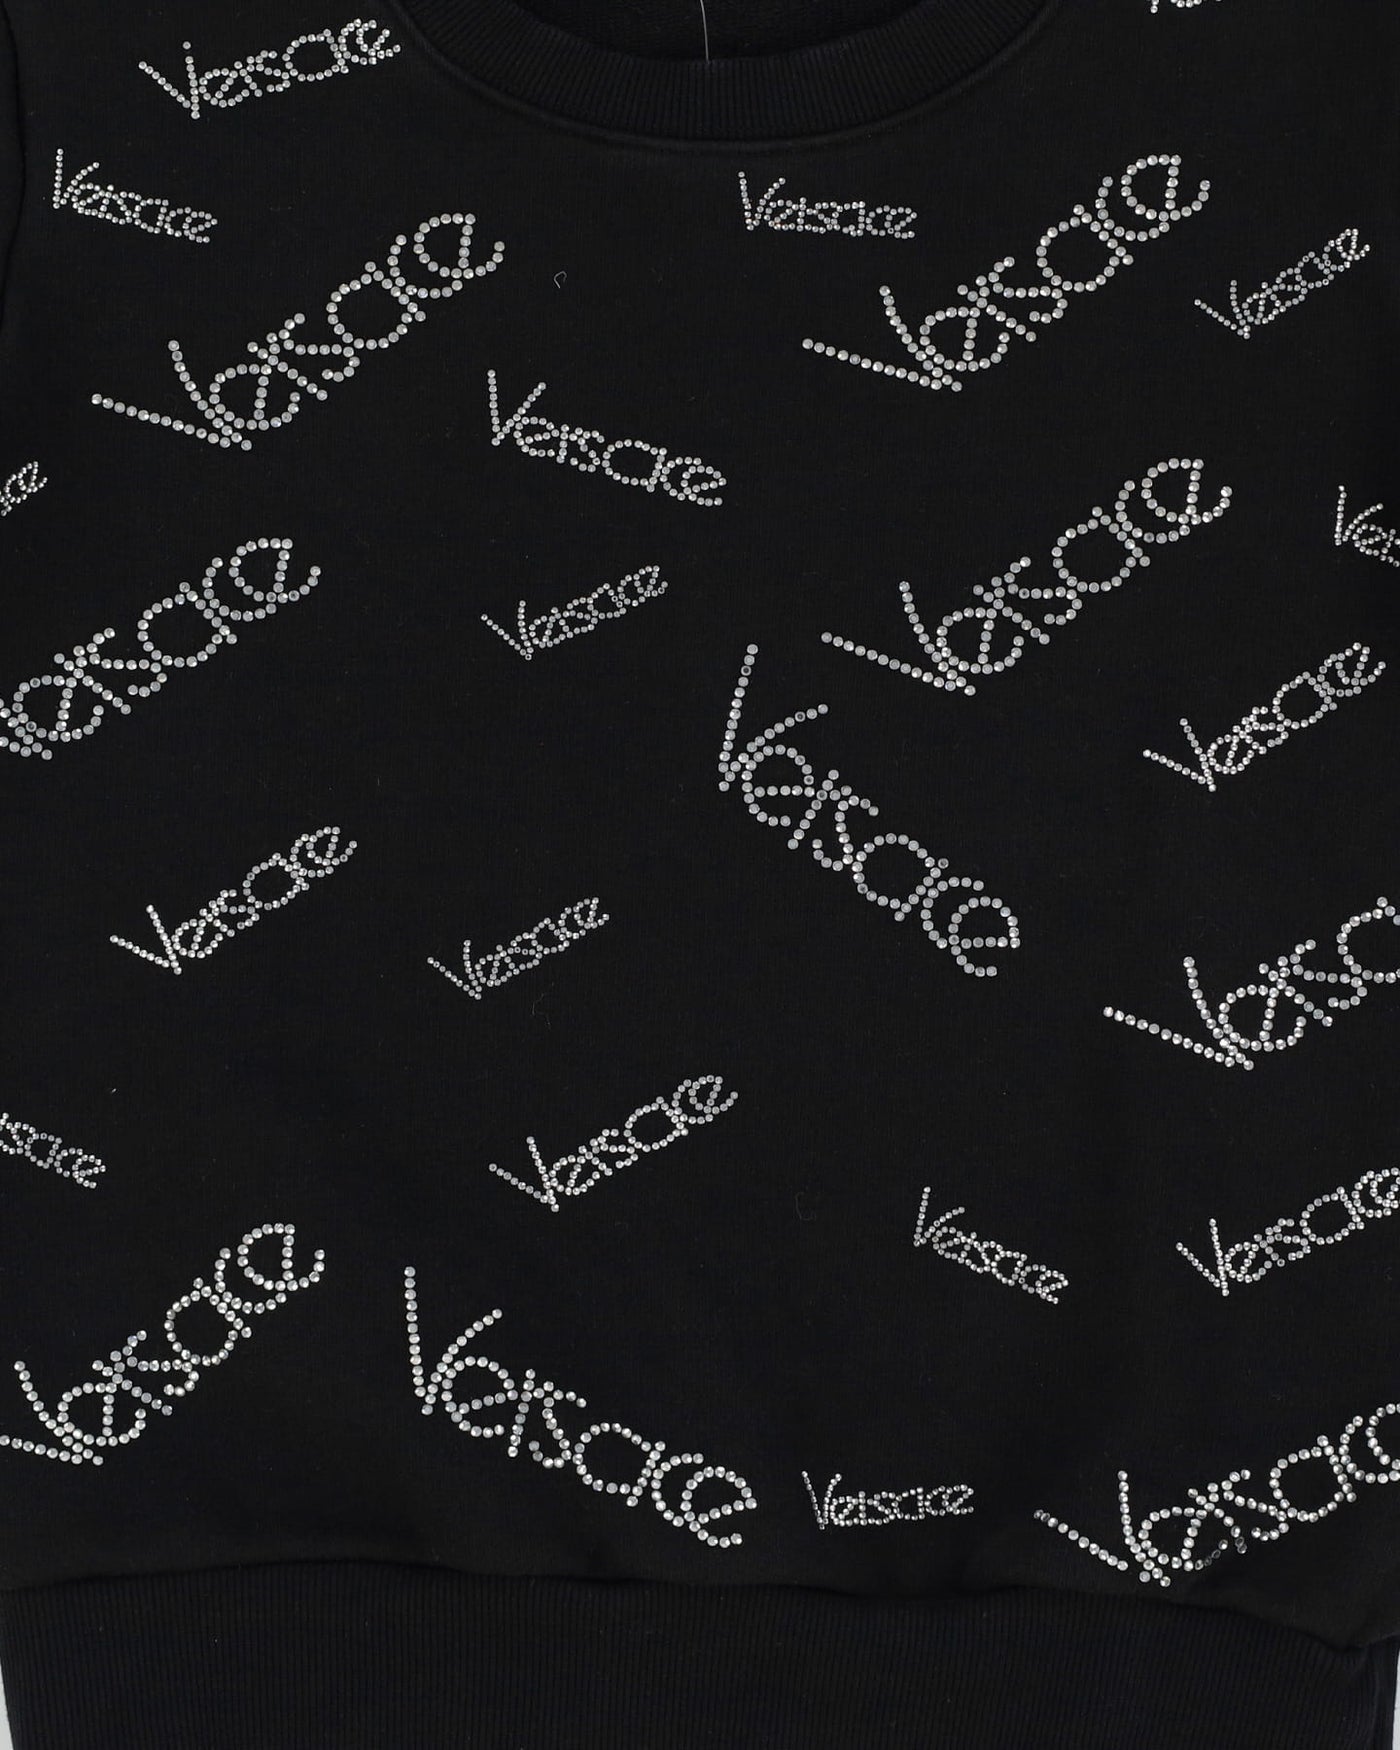 Versace All Over Shiny Logo Black Sweatshirt - S